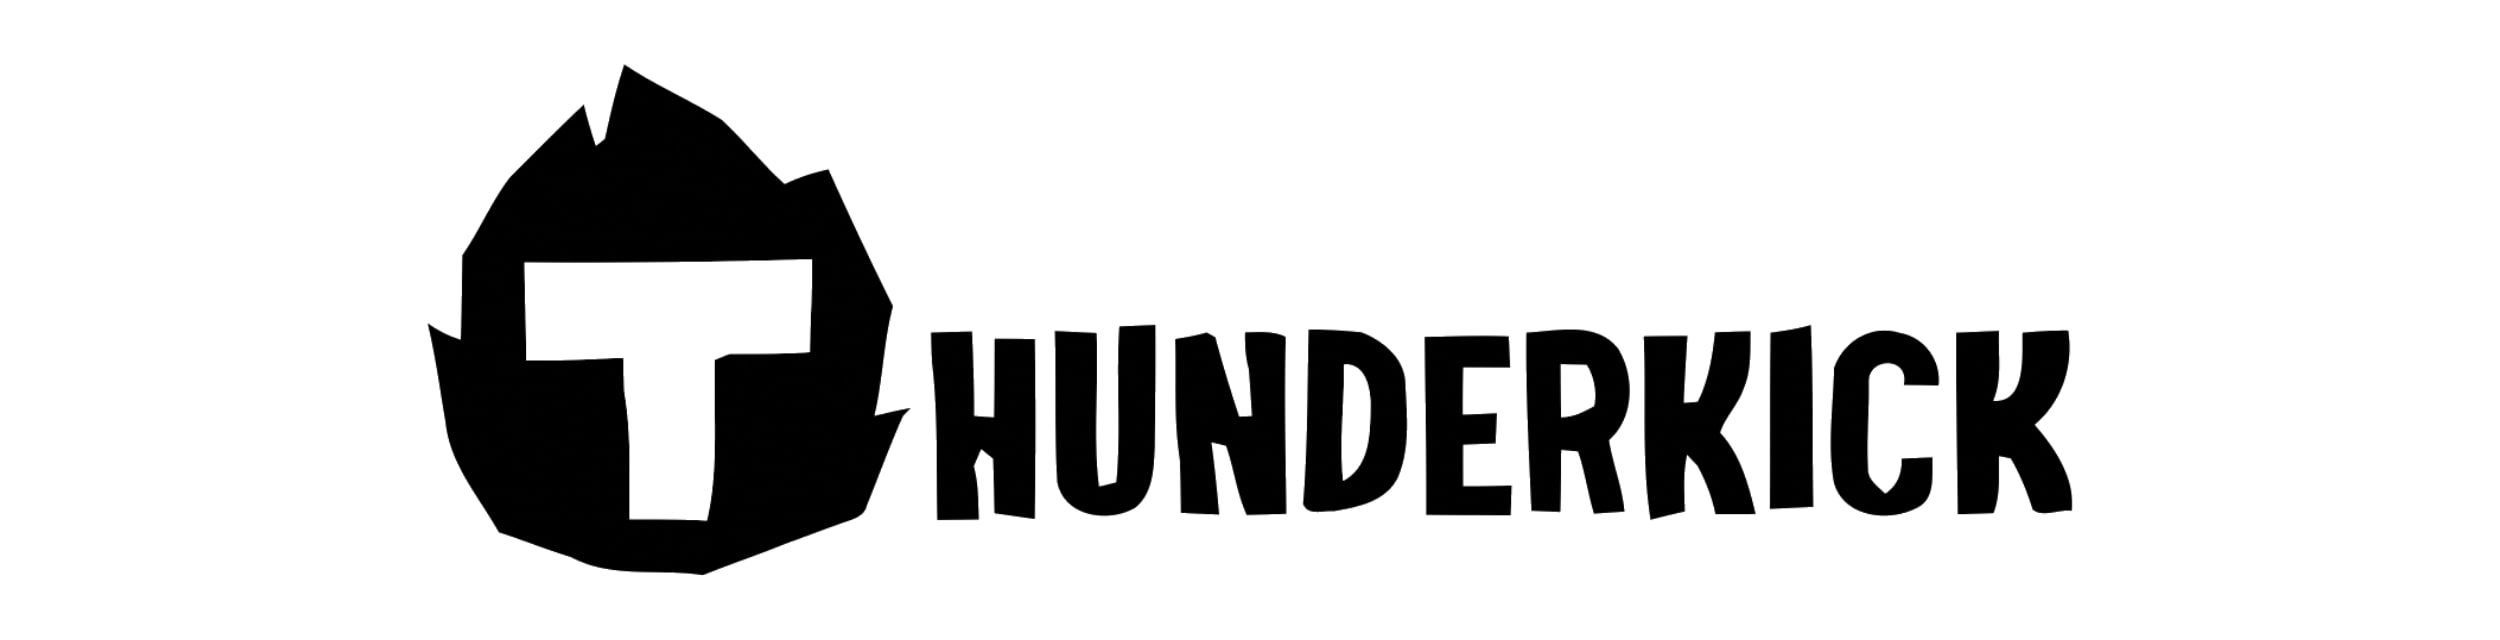 Thunderkick_gaming_logo